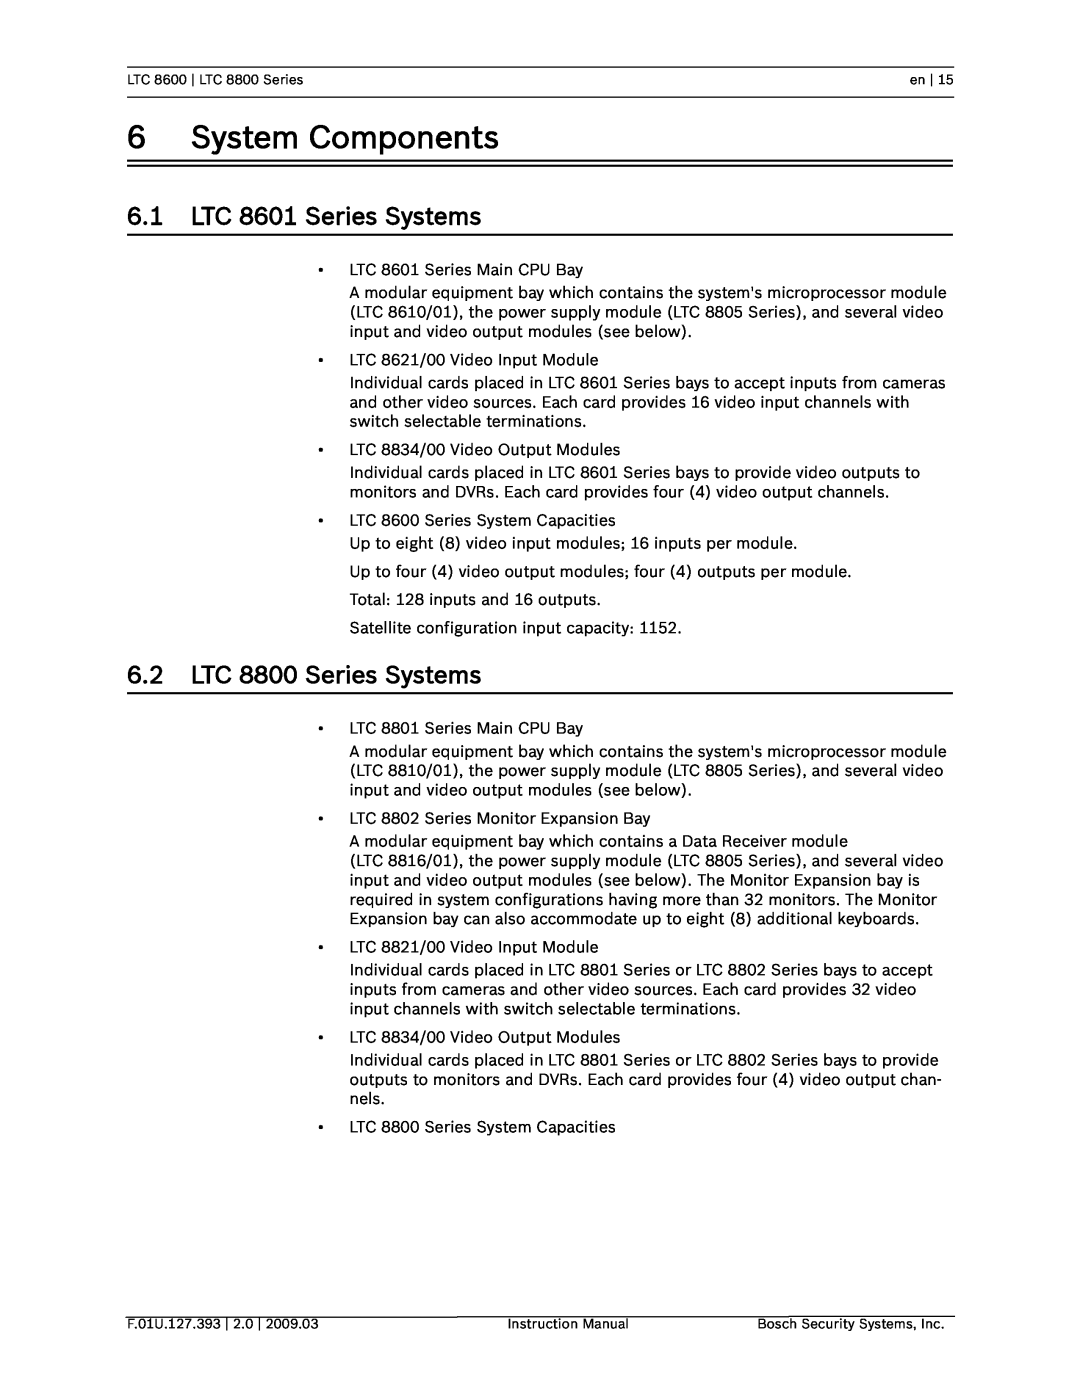 Bosch Appliances LTC 8600 instruction manual System Components, 6.1LTC 8601 Series Systems, 6.2LTC 8800 Series Systems 